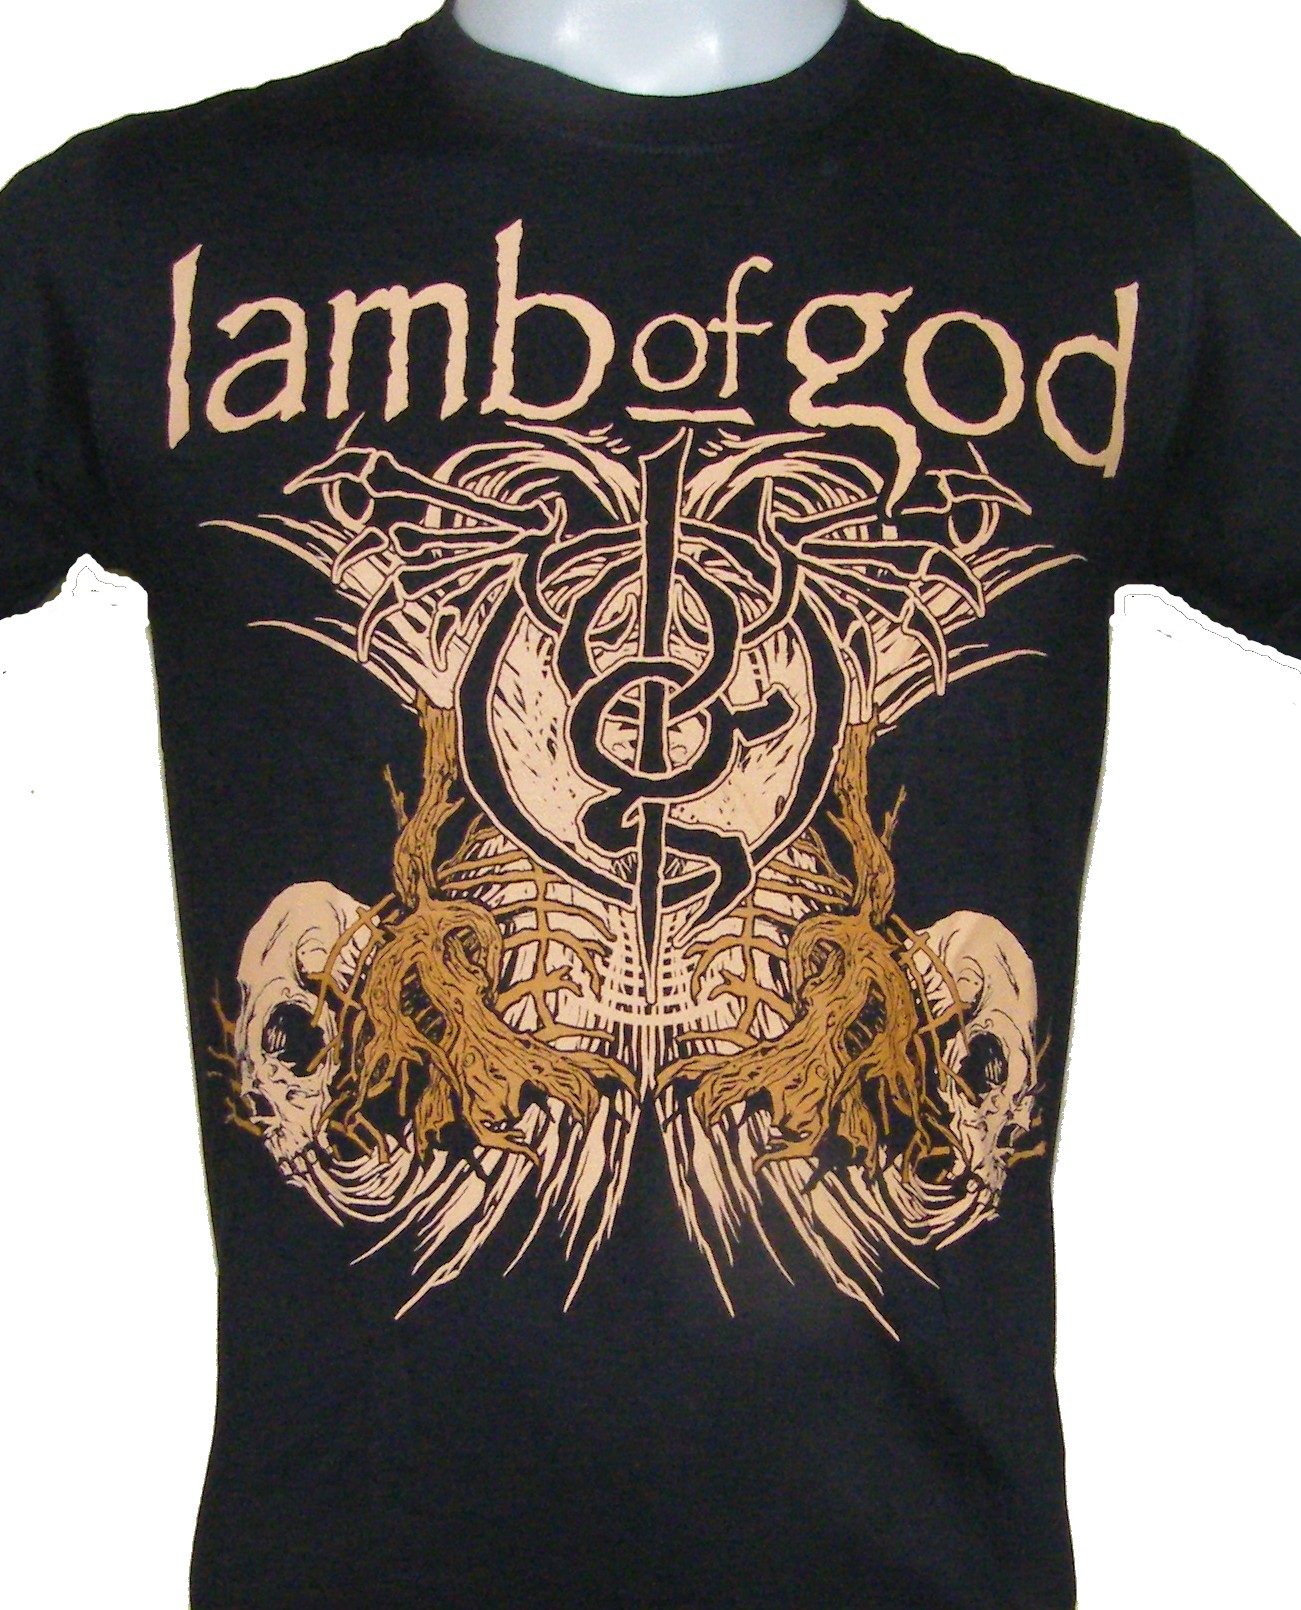 Lamb of god merch uk